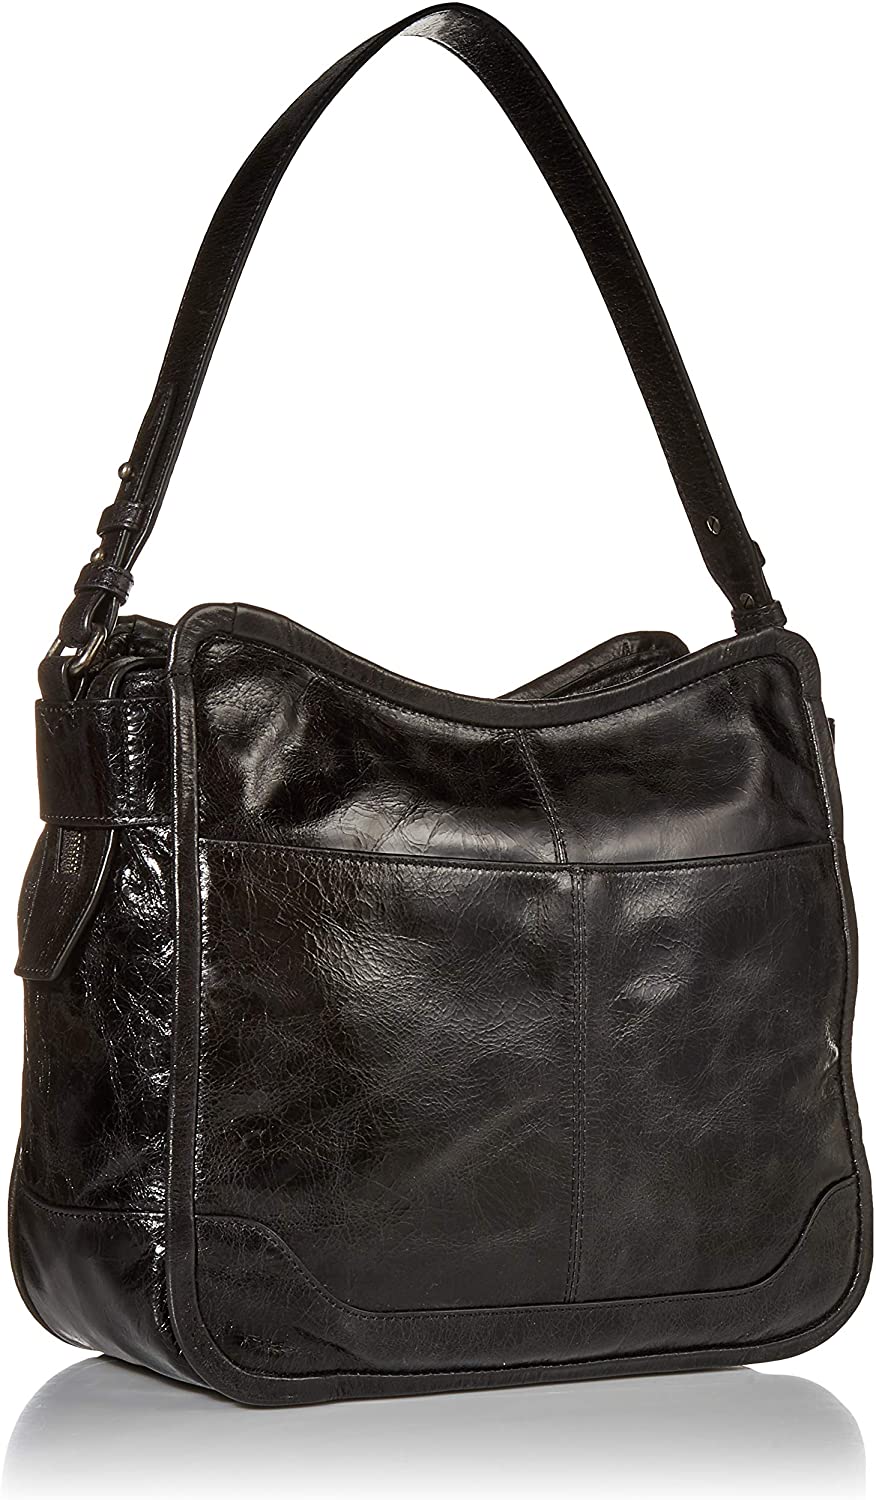 Frye Mel Ladies Medium Black Leather Hobo Bag DB0365-001 | eBay